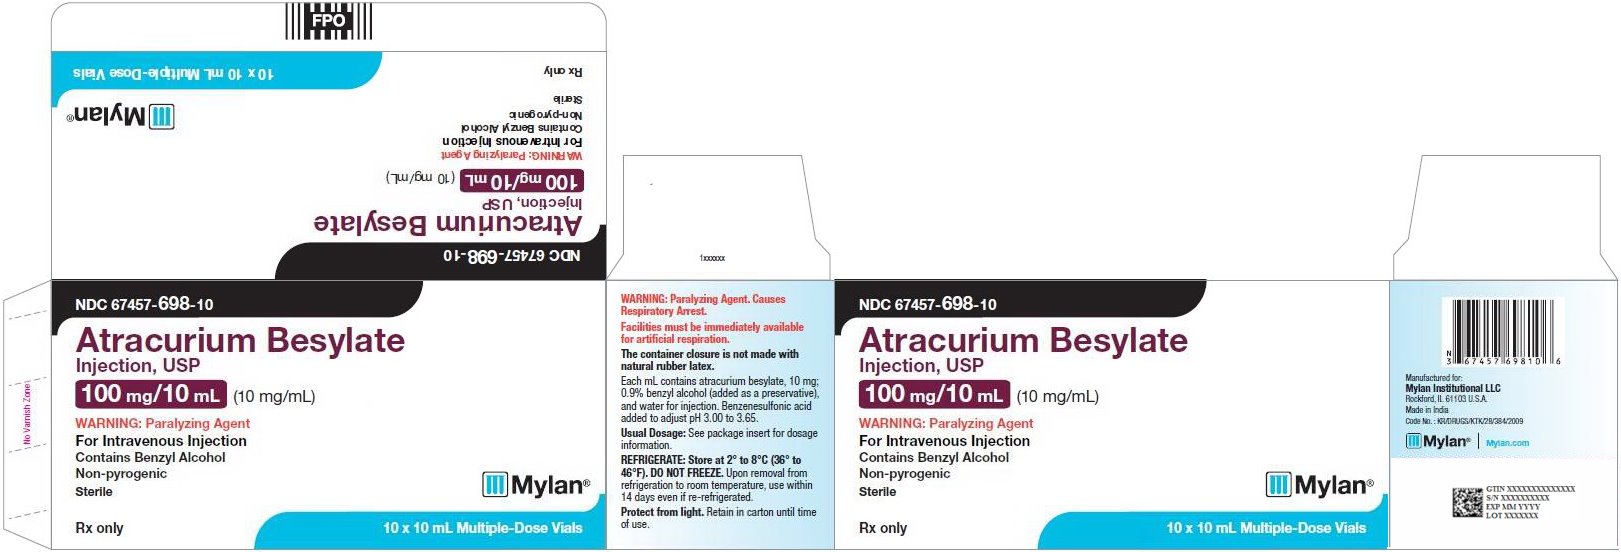 Atracurium Besylate Injection 100 mg/10 mL Carton Label